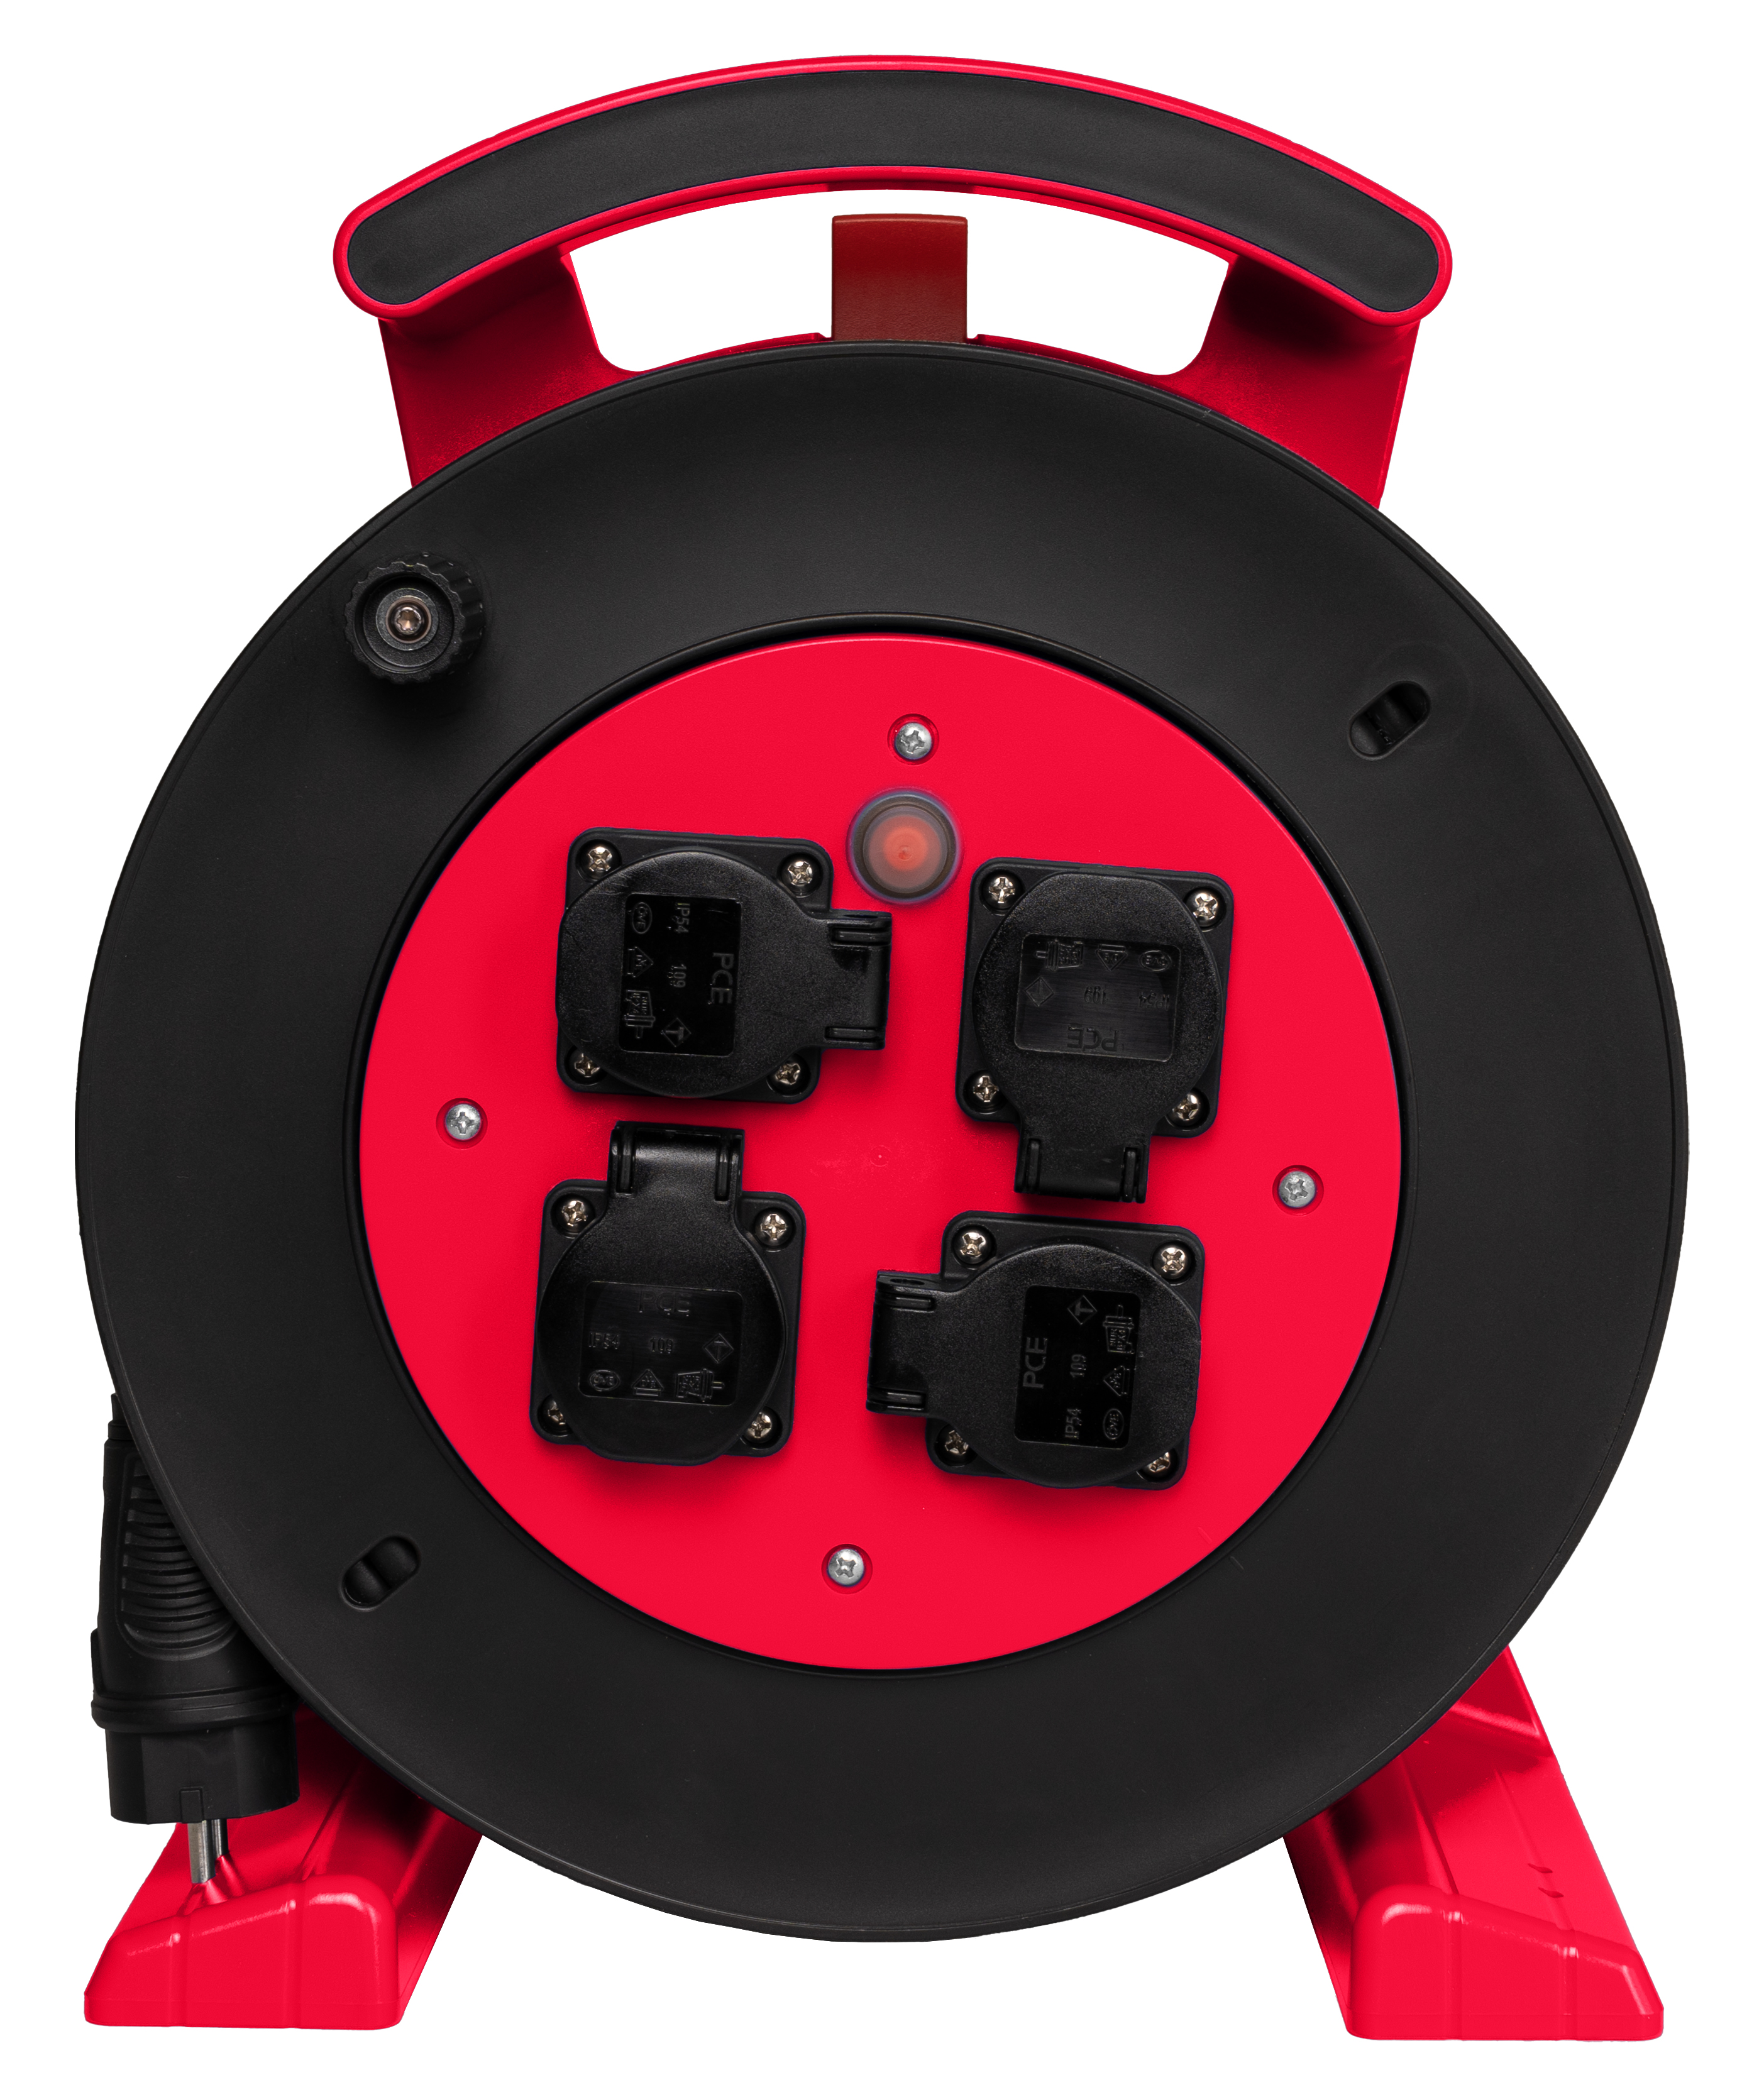 Kabeltrommel rot-schwarz, 4 x Schutzkontakt-Steckdose, H07RN-F 3 G 1,5 mm², 40 m JUMBO L 2.0